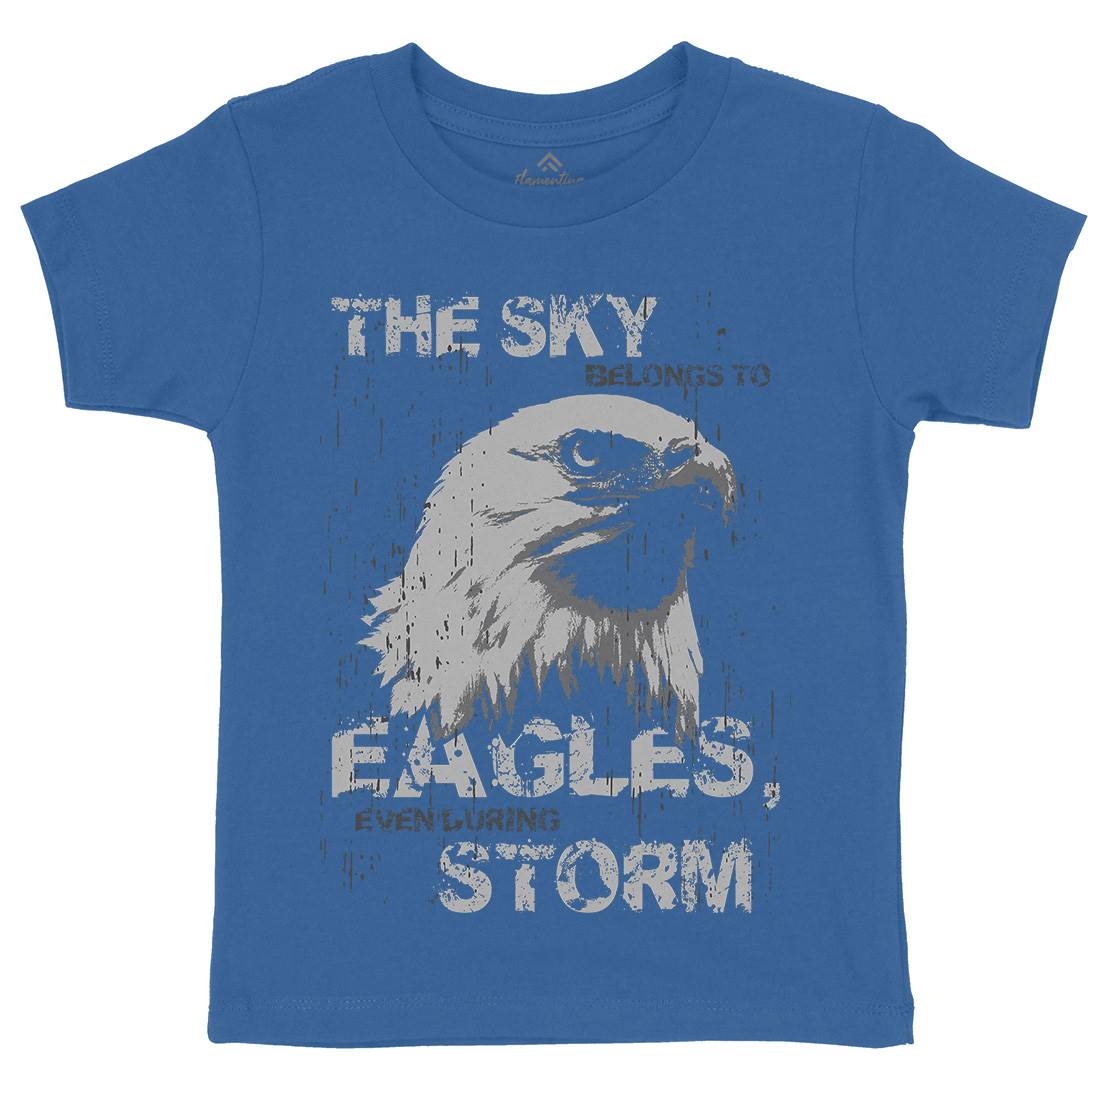 Eagle Sky Storm Kids Crew Neck T-Shirt Animals B719